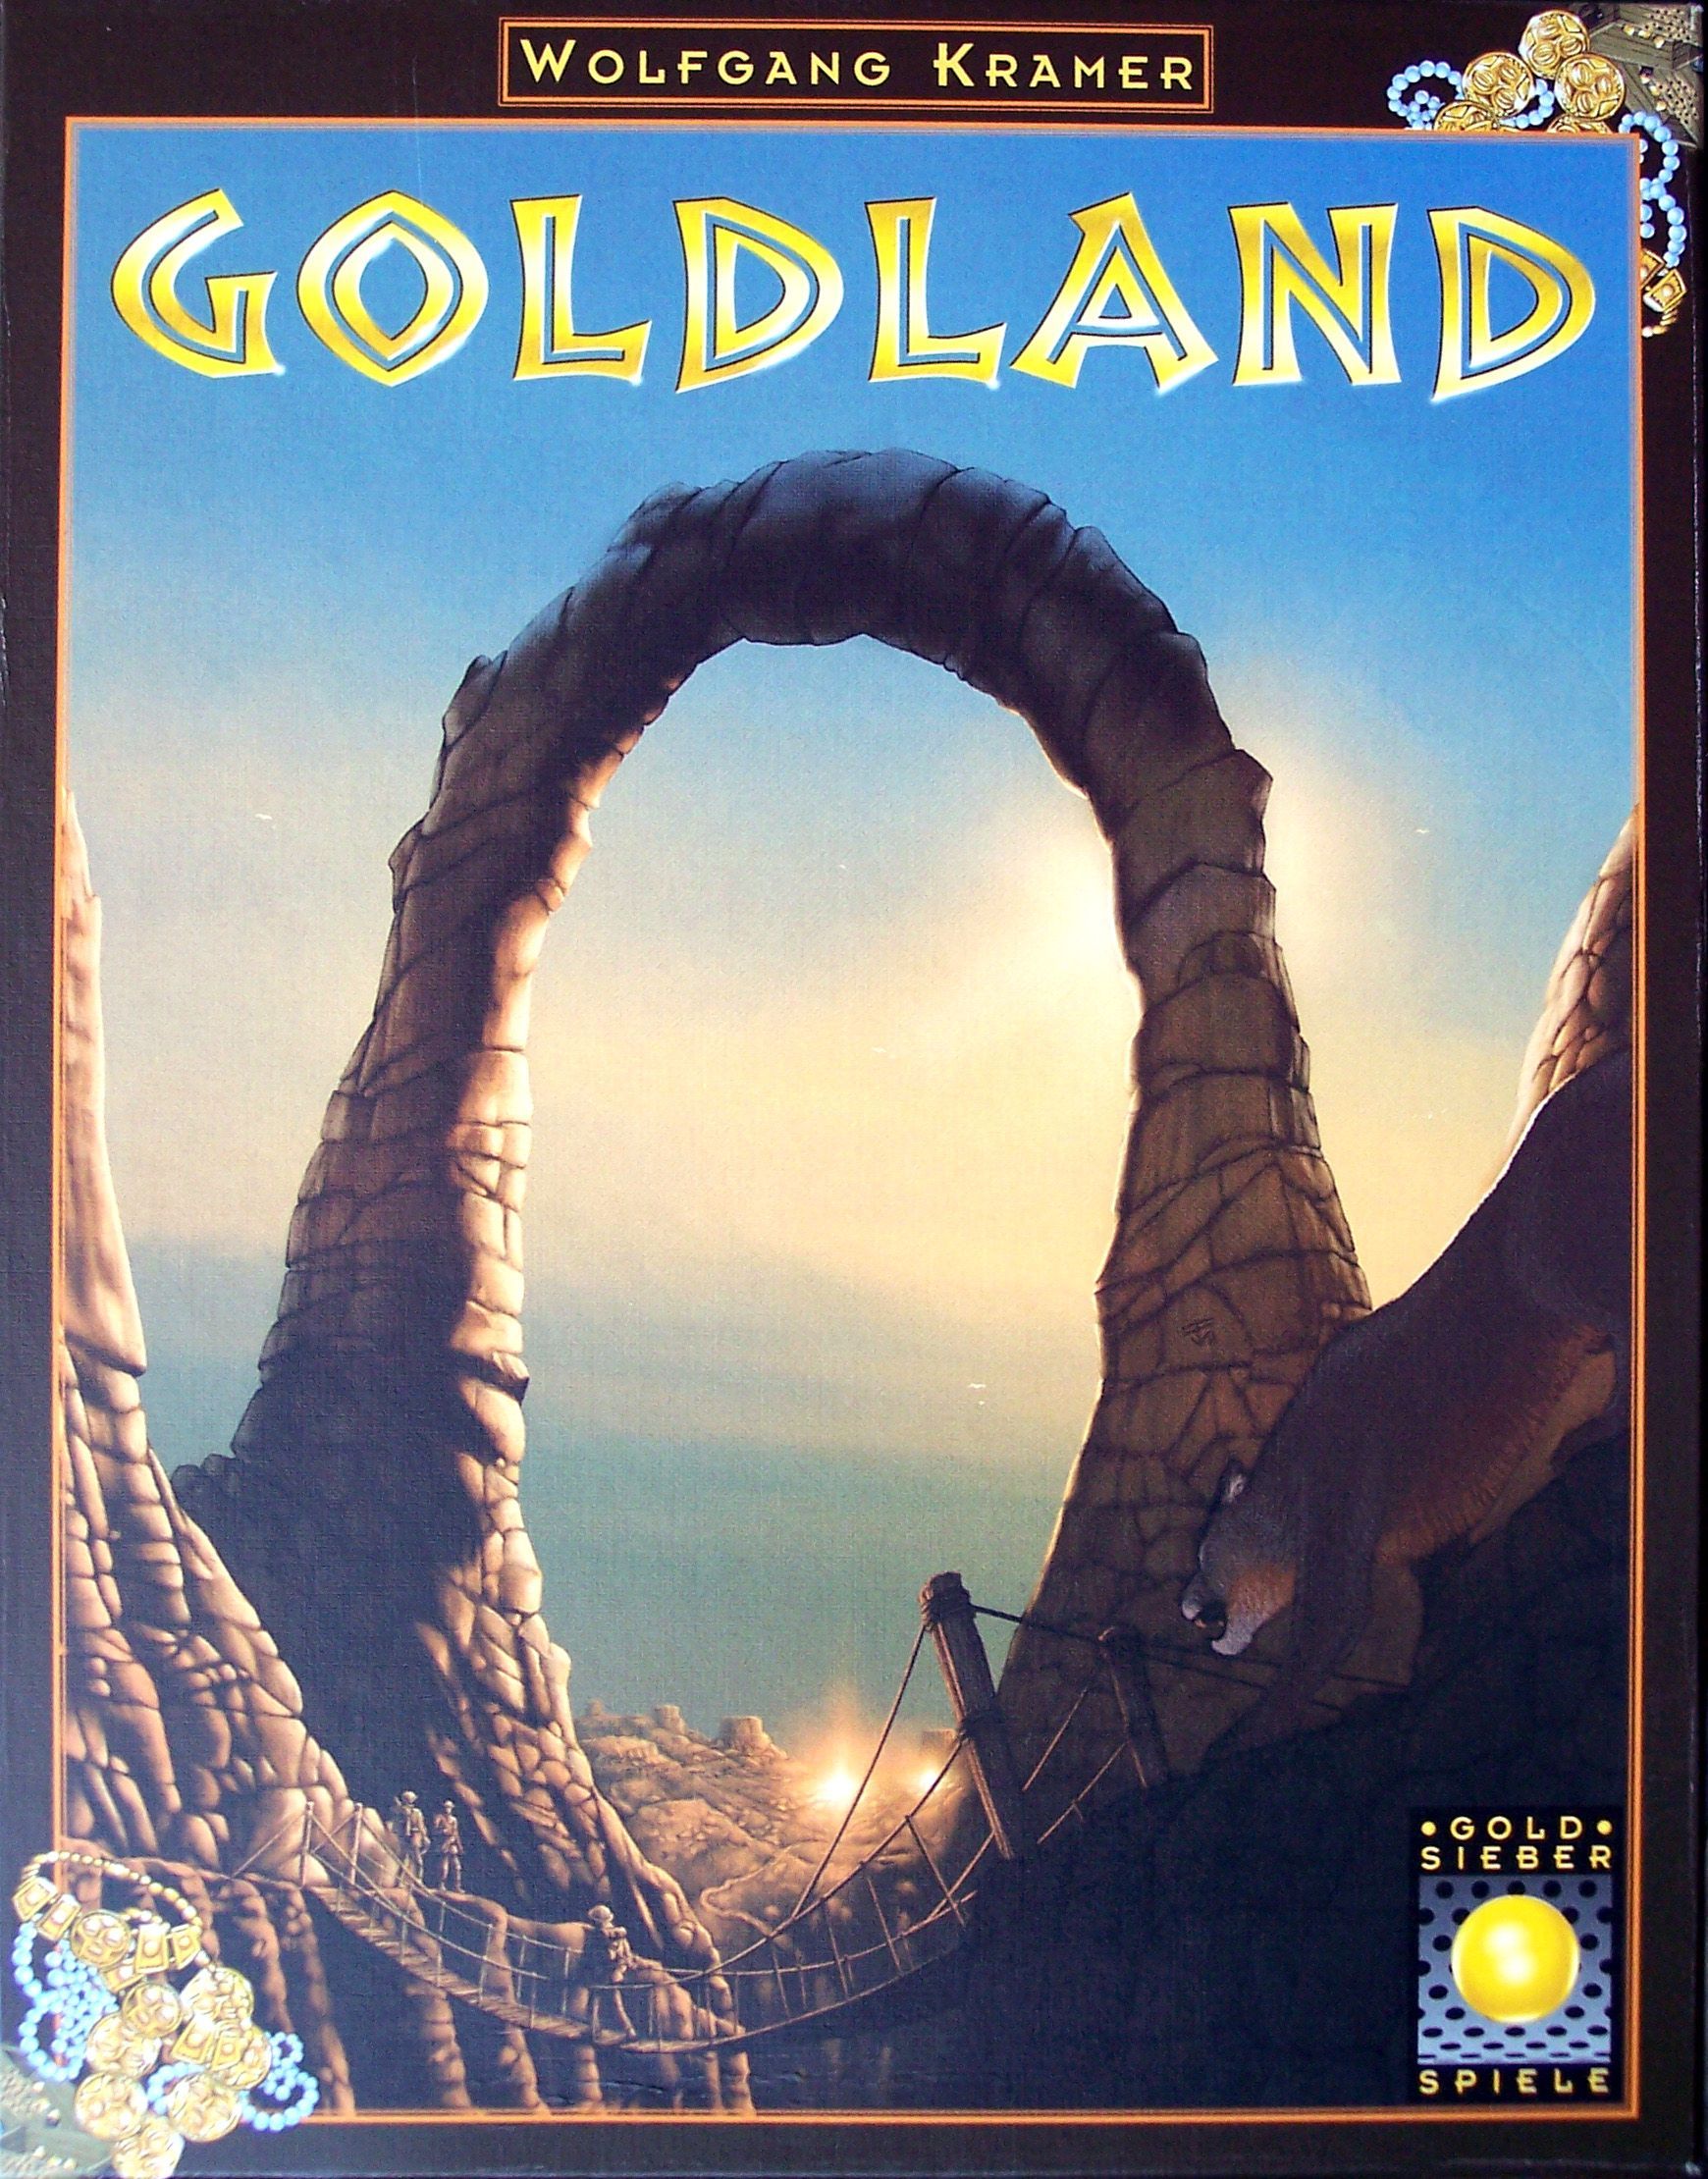 Goldland